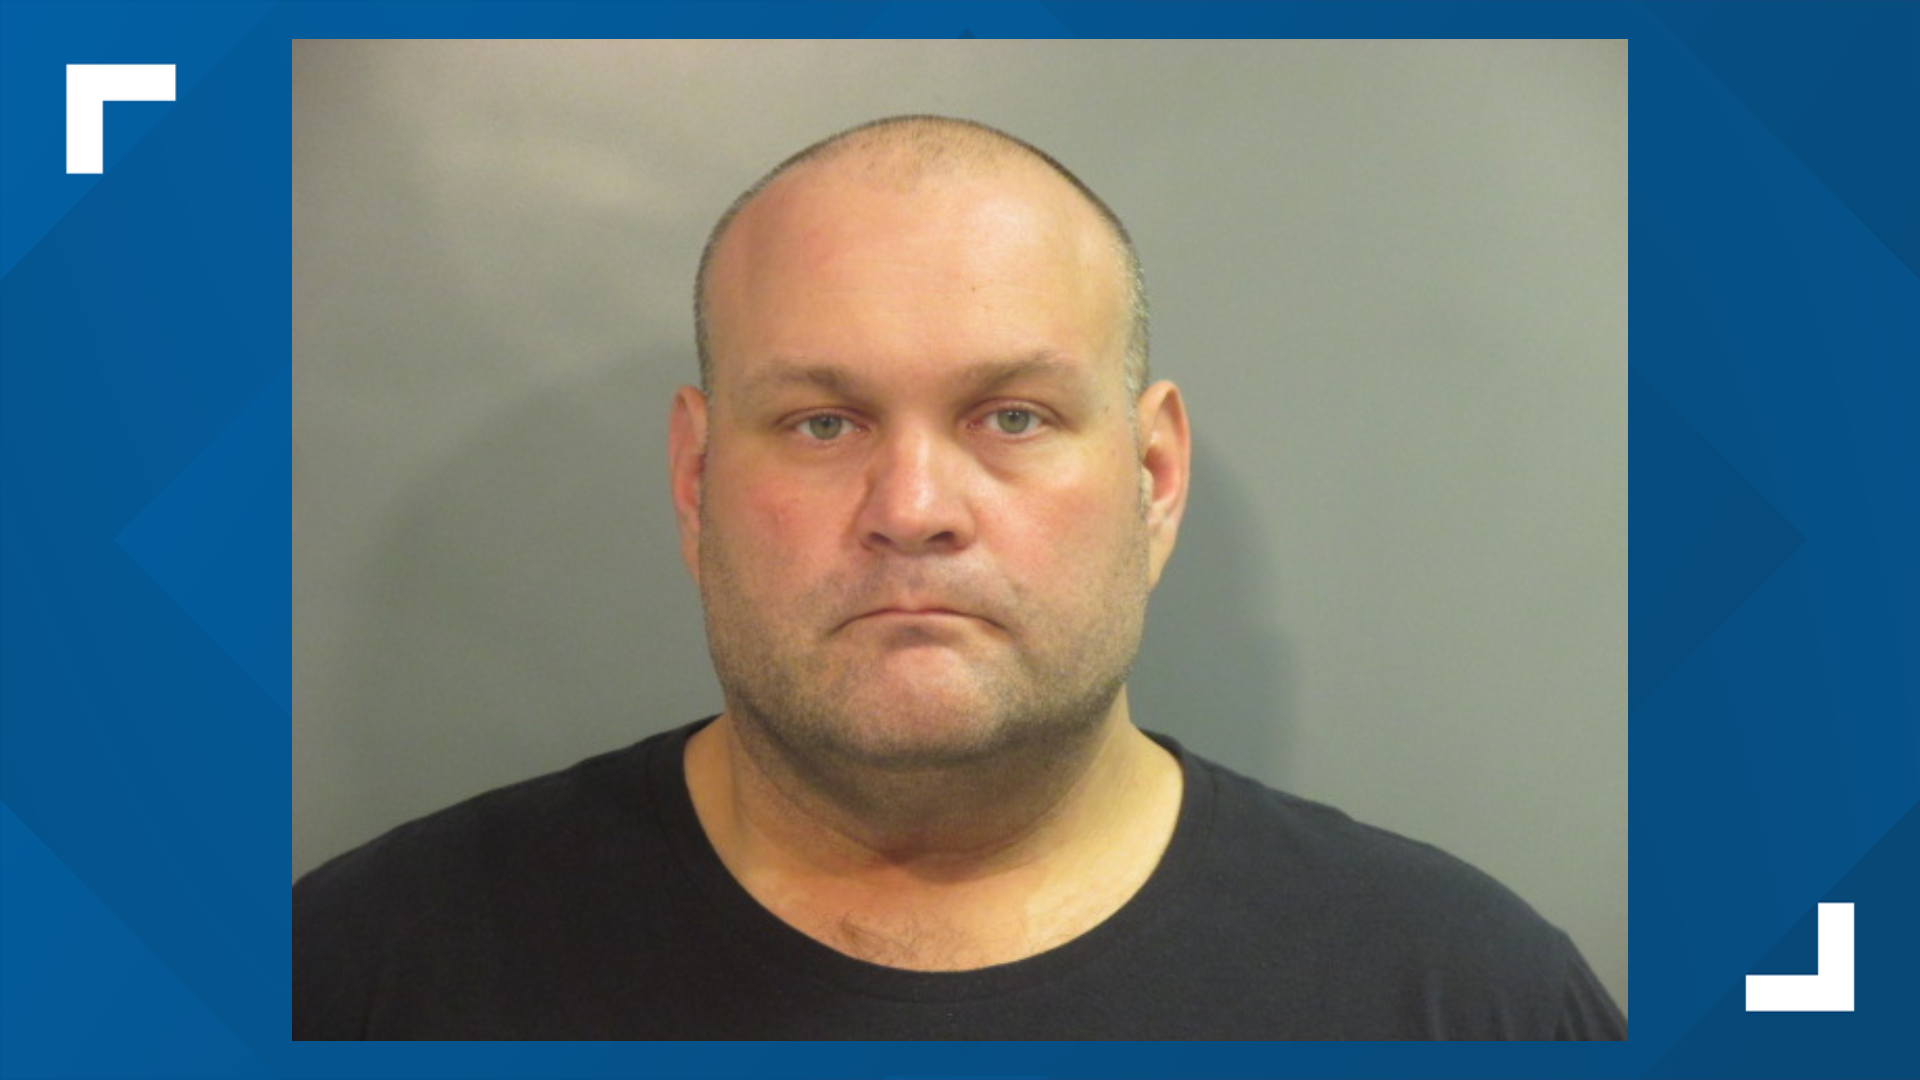 Deputy Steven Carter, 44, was arrested Monday, Jan. 13 by the Elkins Police Department.